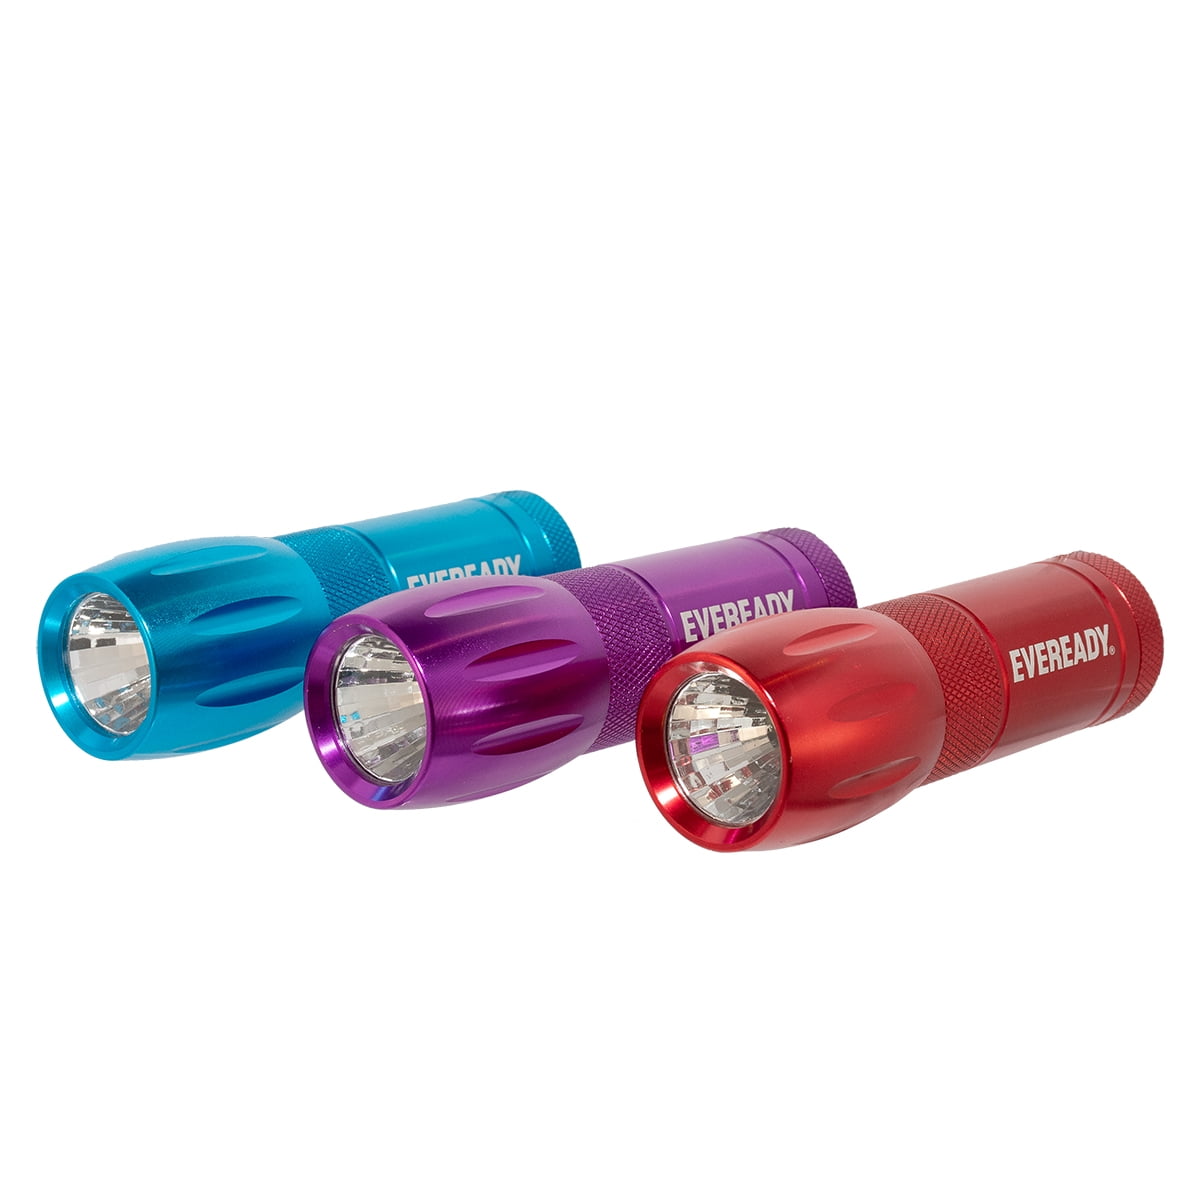 Eveready Compact LED Metal Flashlight, 80 Lumen Light Output - Walmart.com